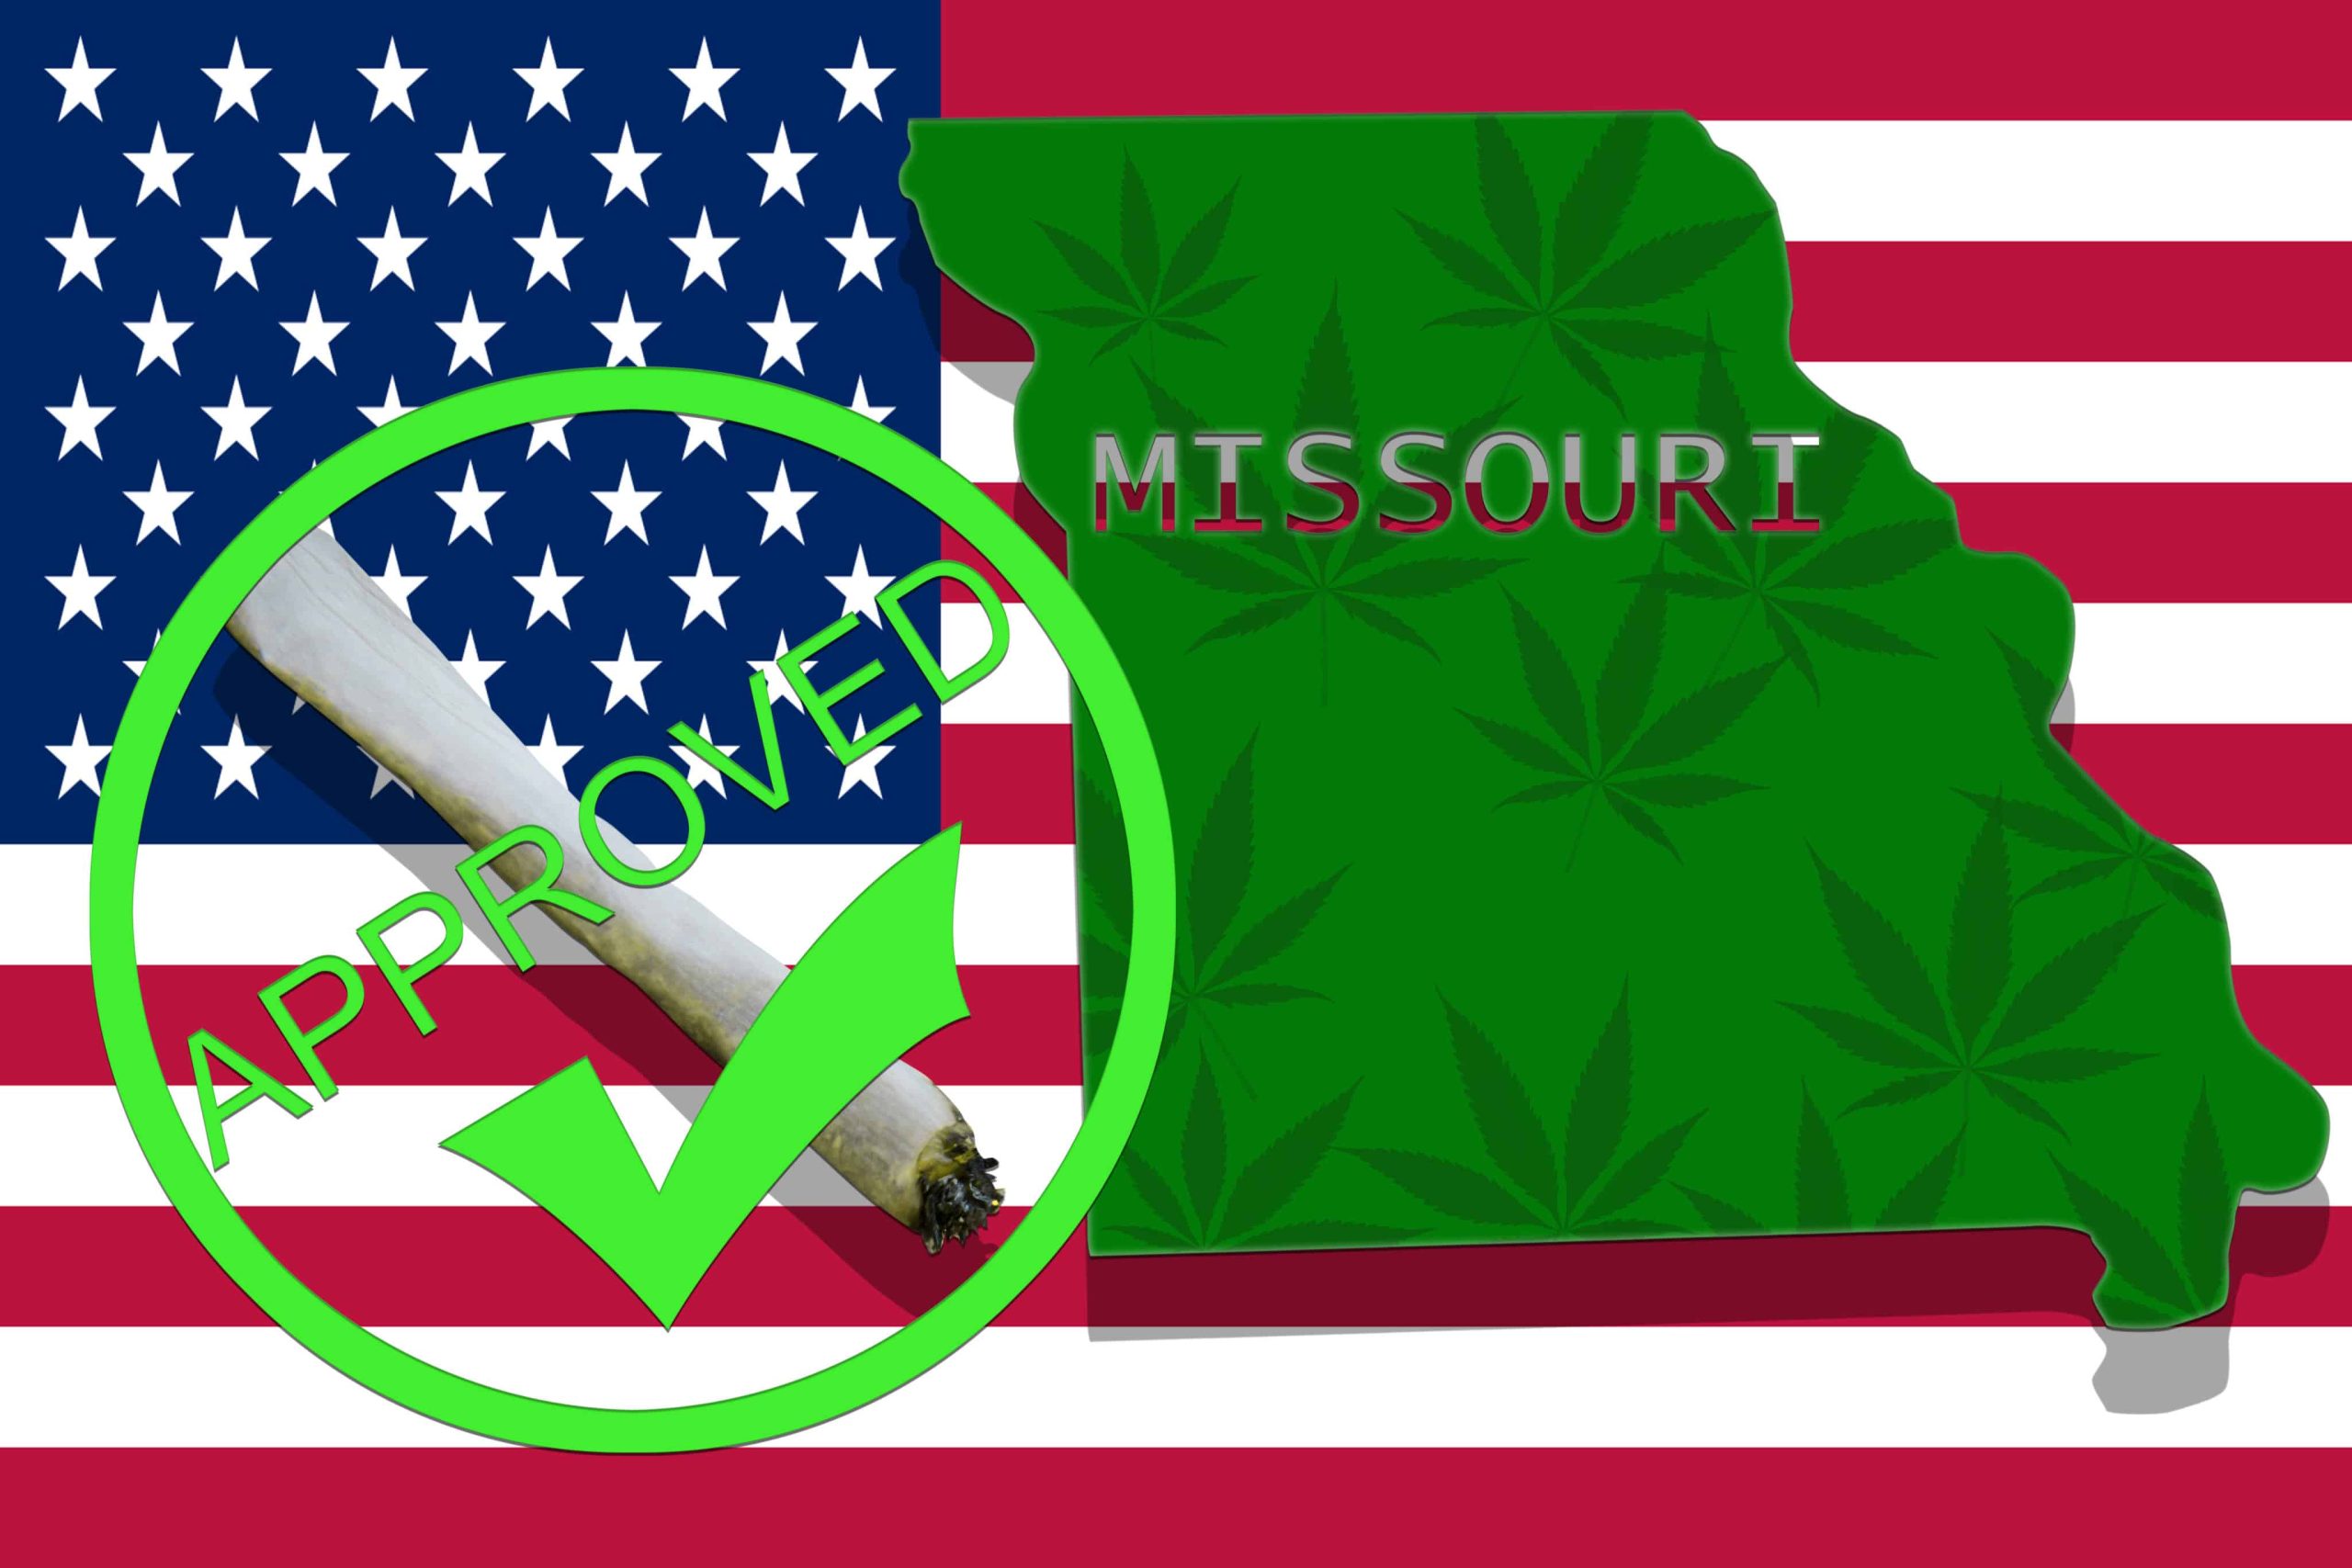 Amendment 3 Passes in Missouri, Legalizing Cannabis